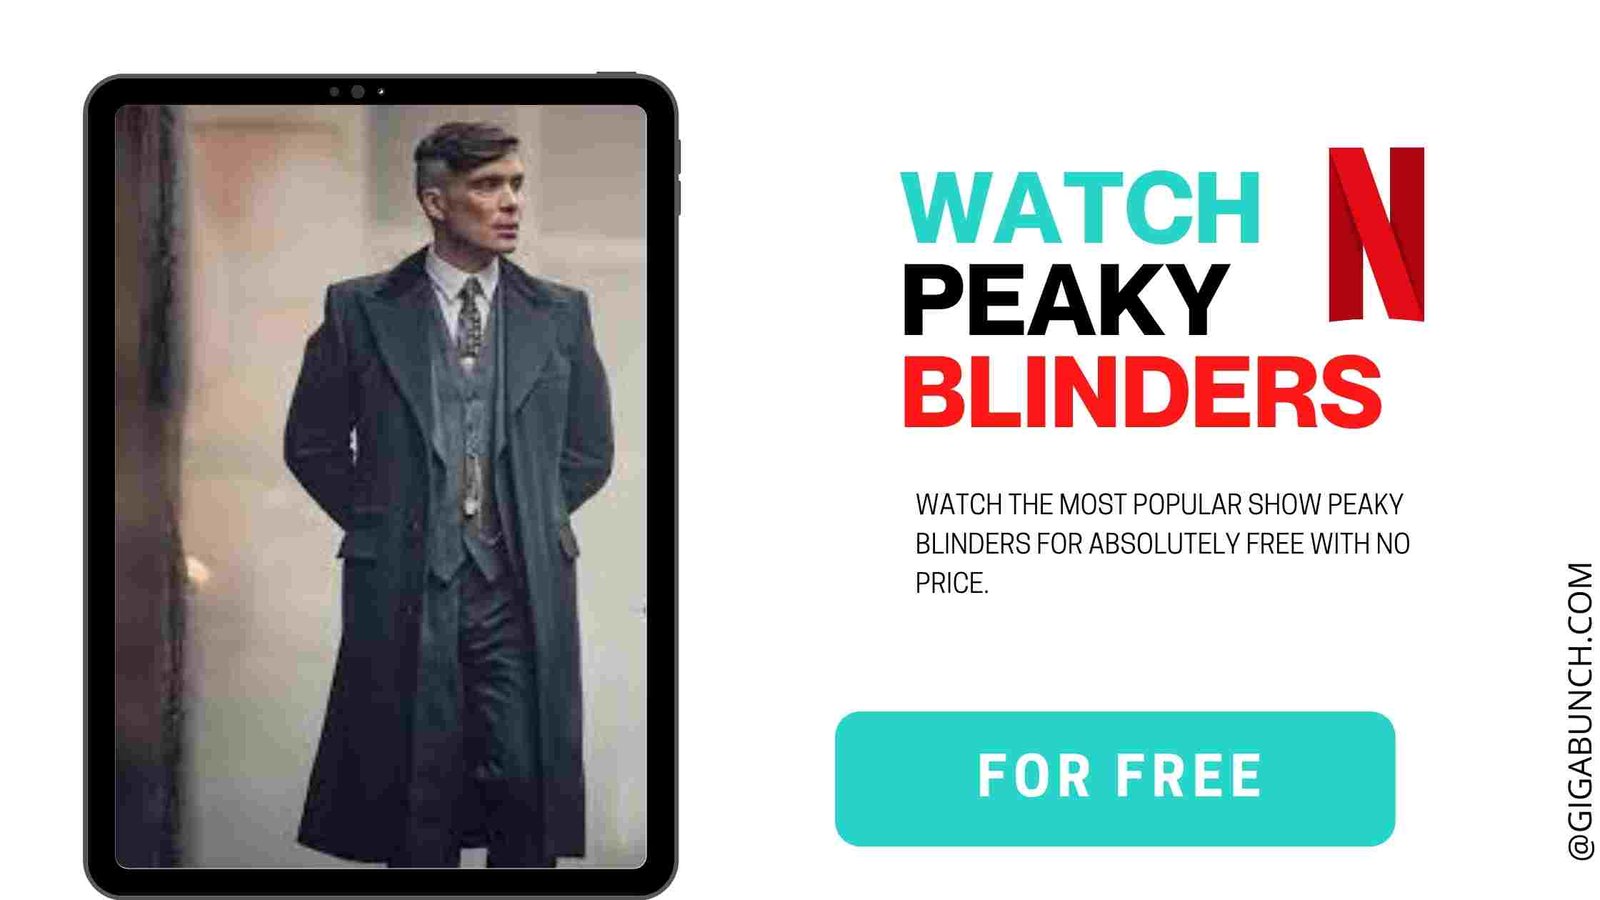 How To Watch Peaky Blinders Season 6 For Free